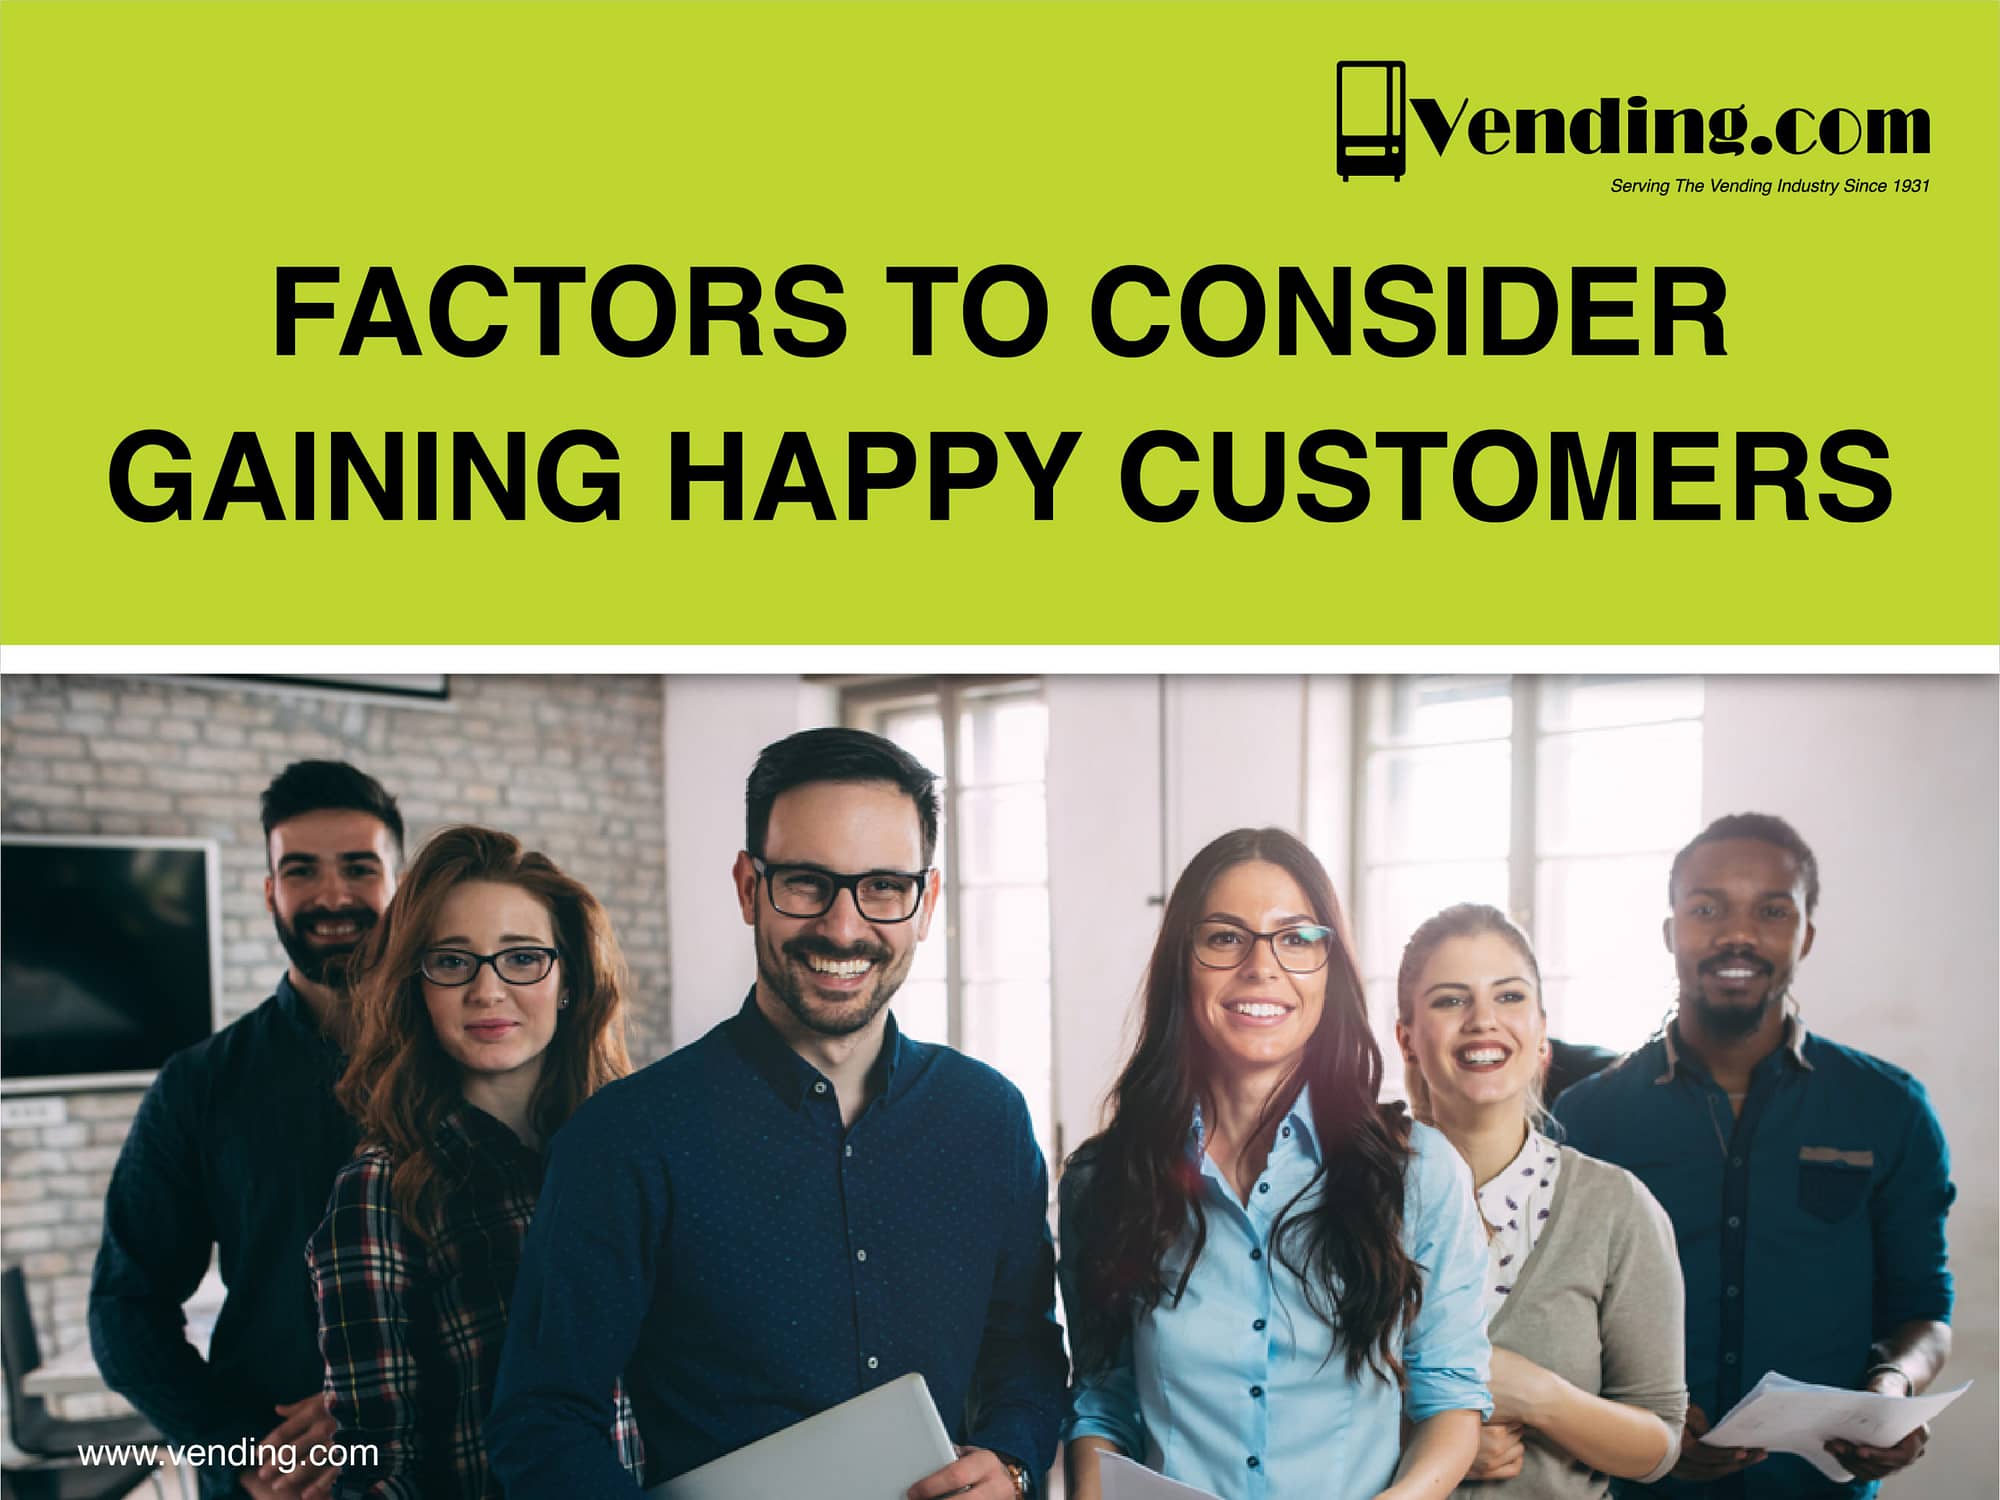 Vending.com - Factors To Consider Gaining Happy Customers